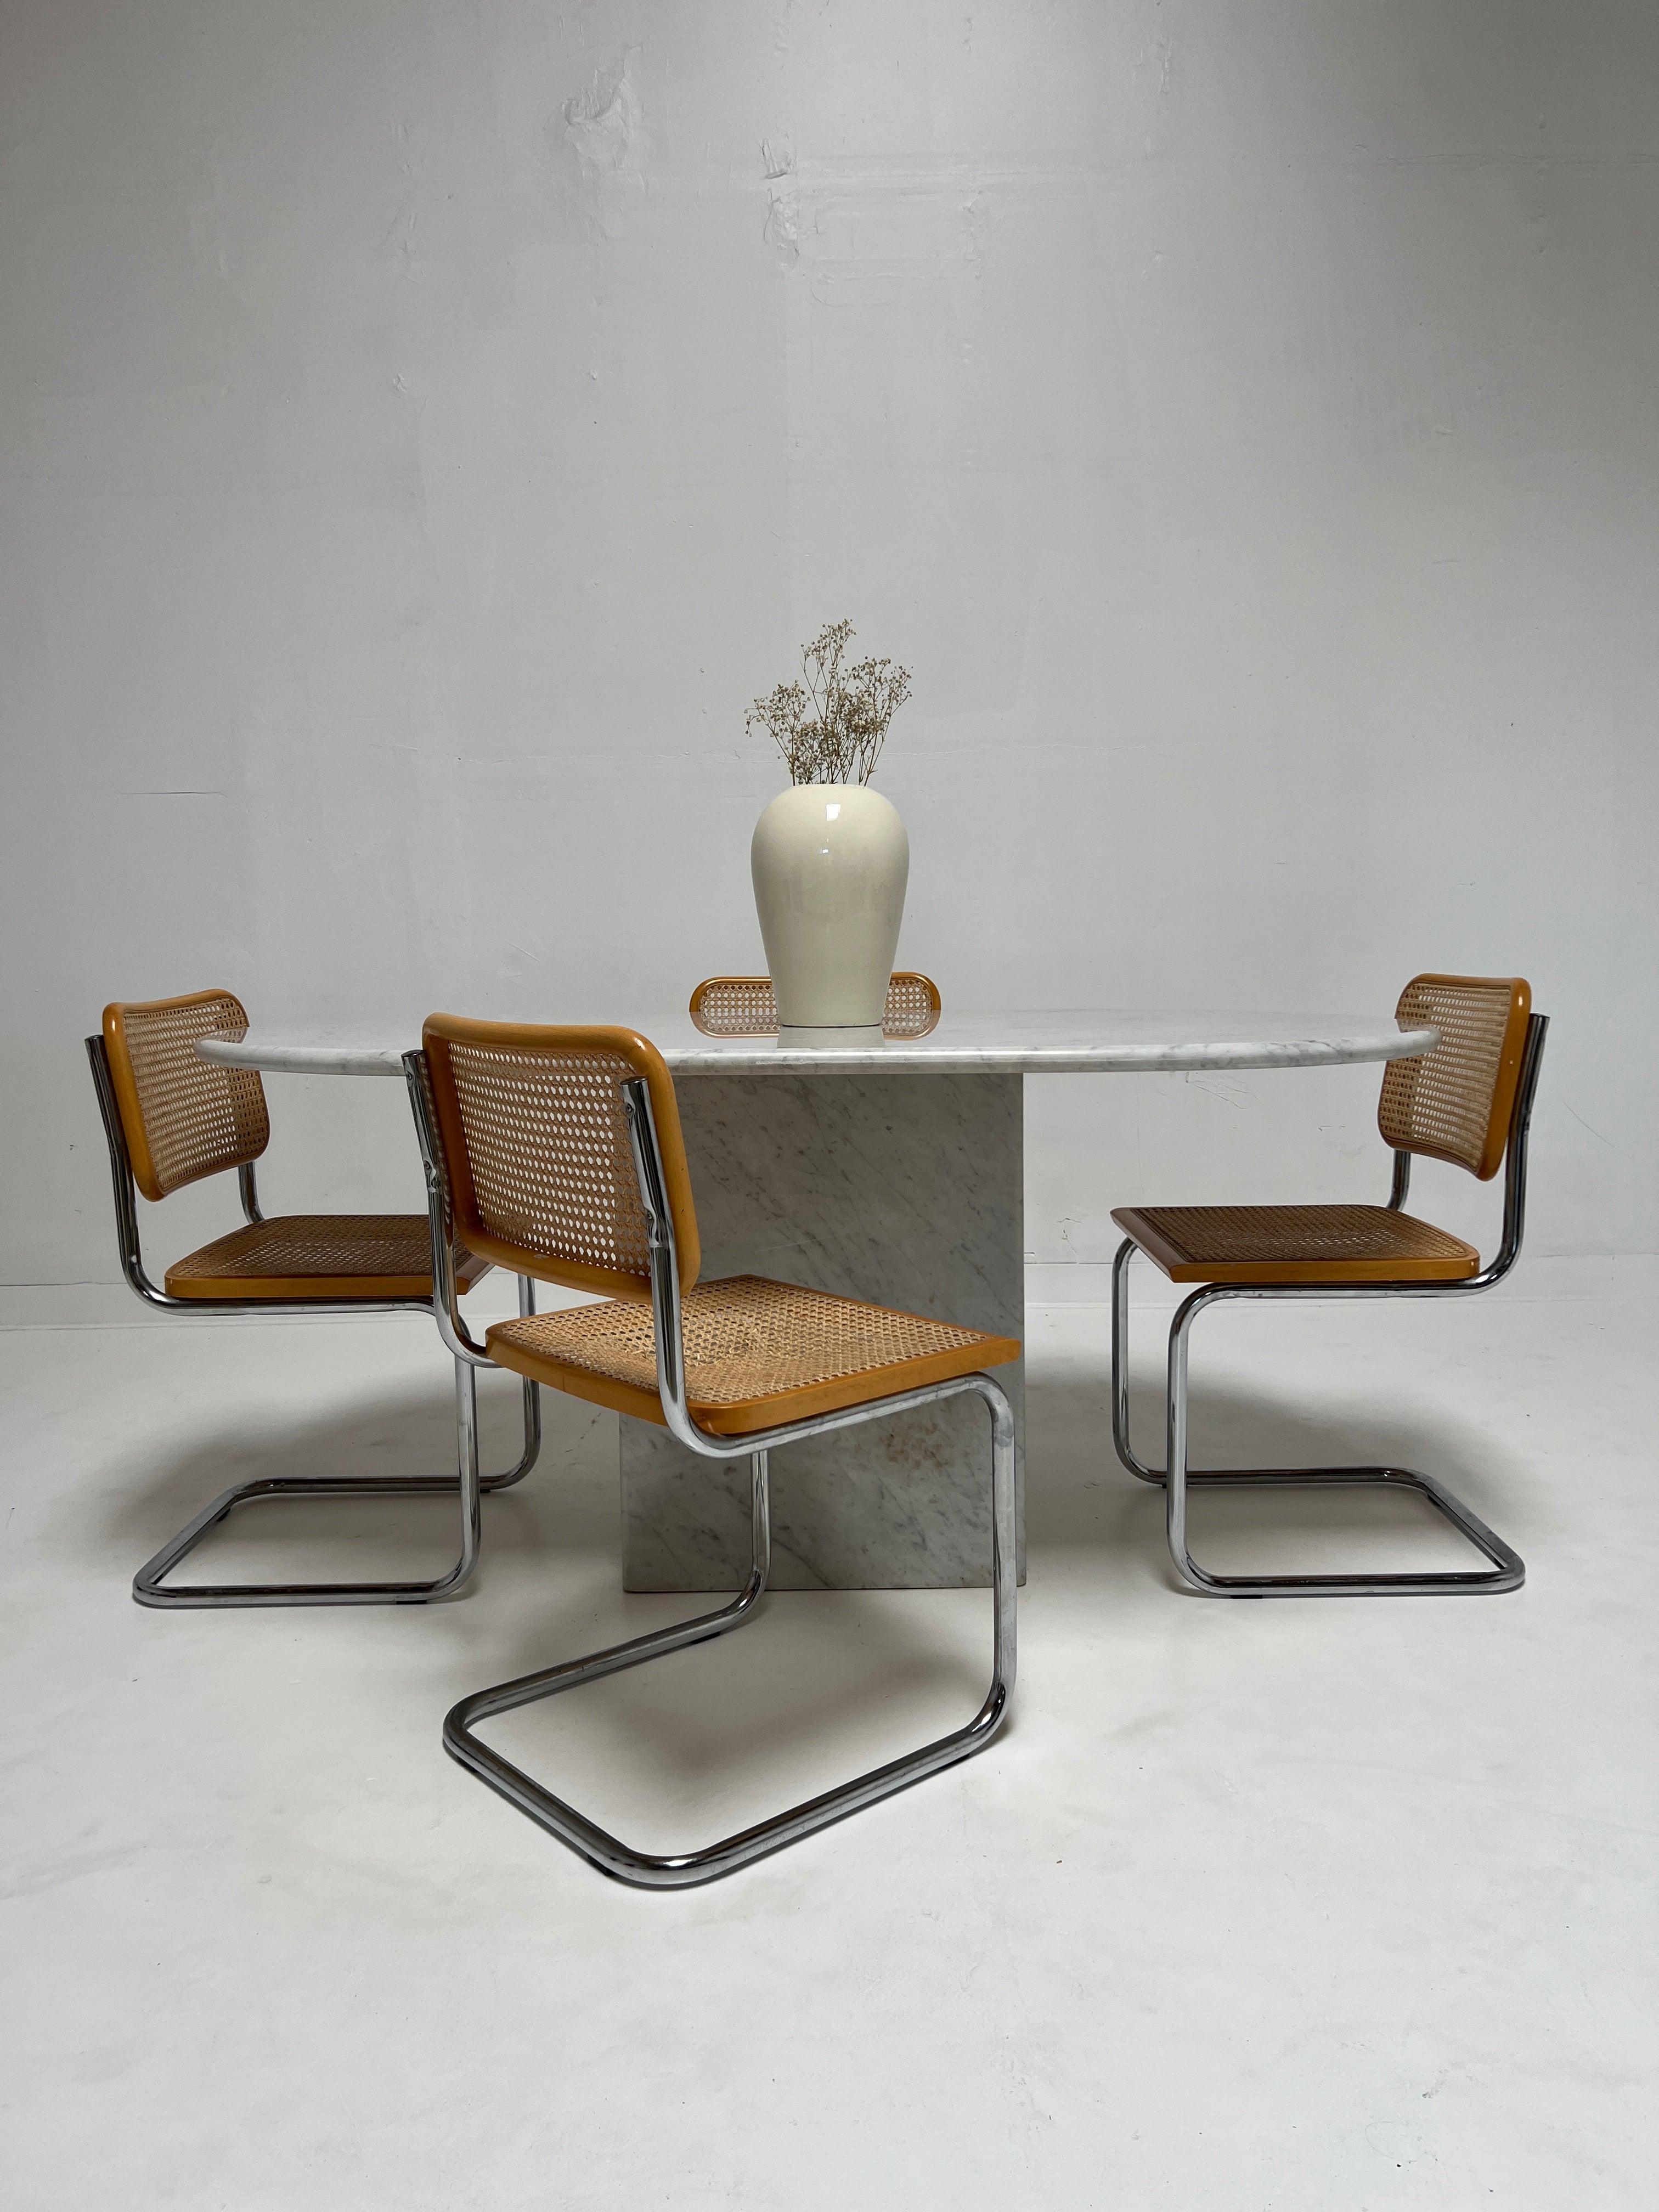 1970s Italian Carrara Marble Dining Table